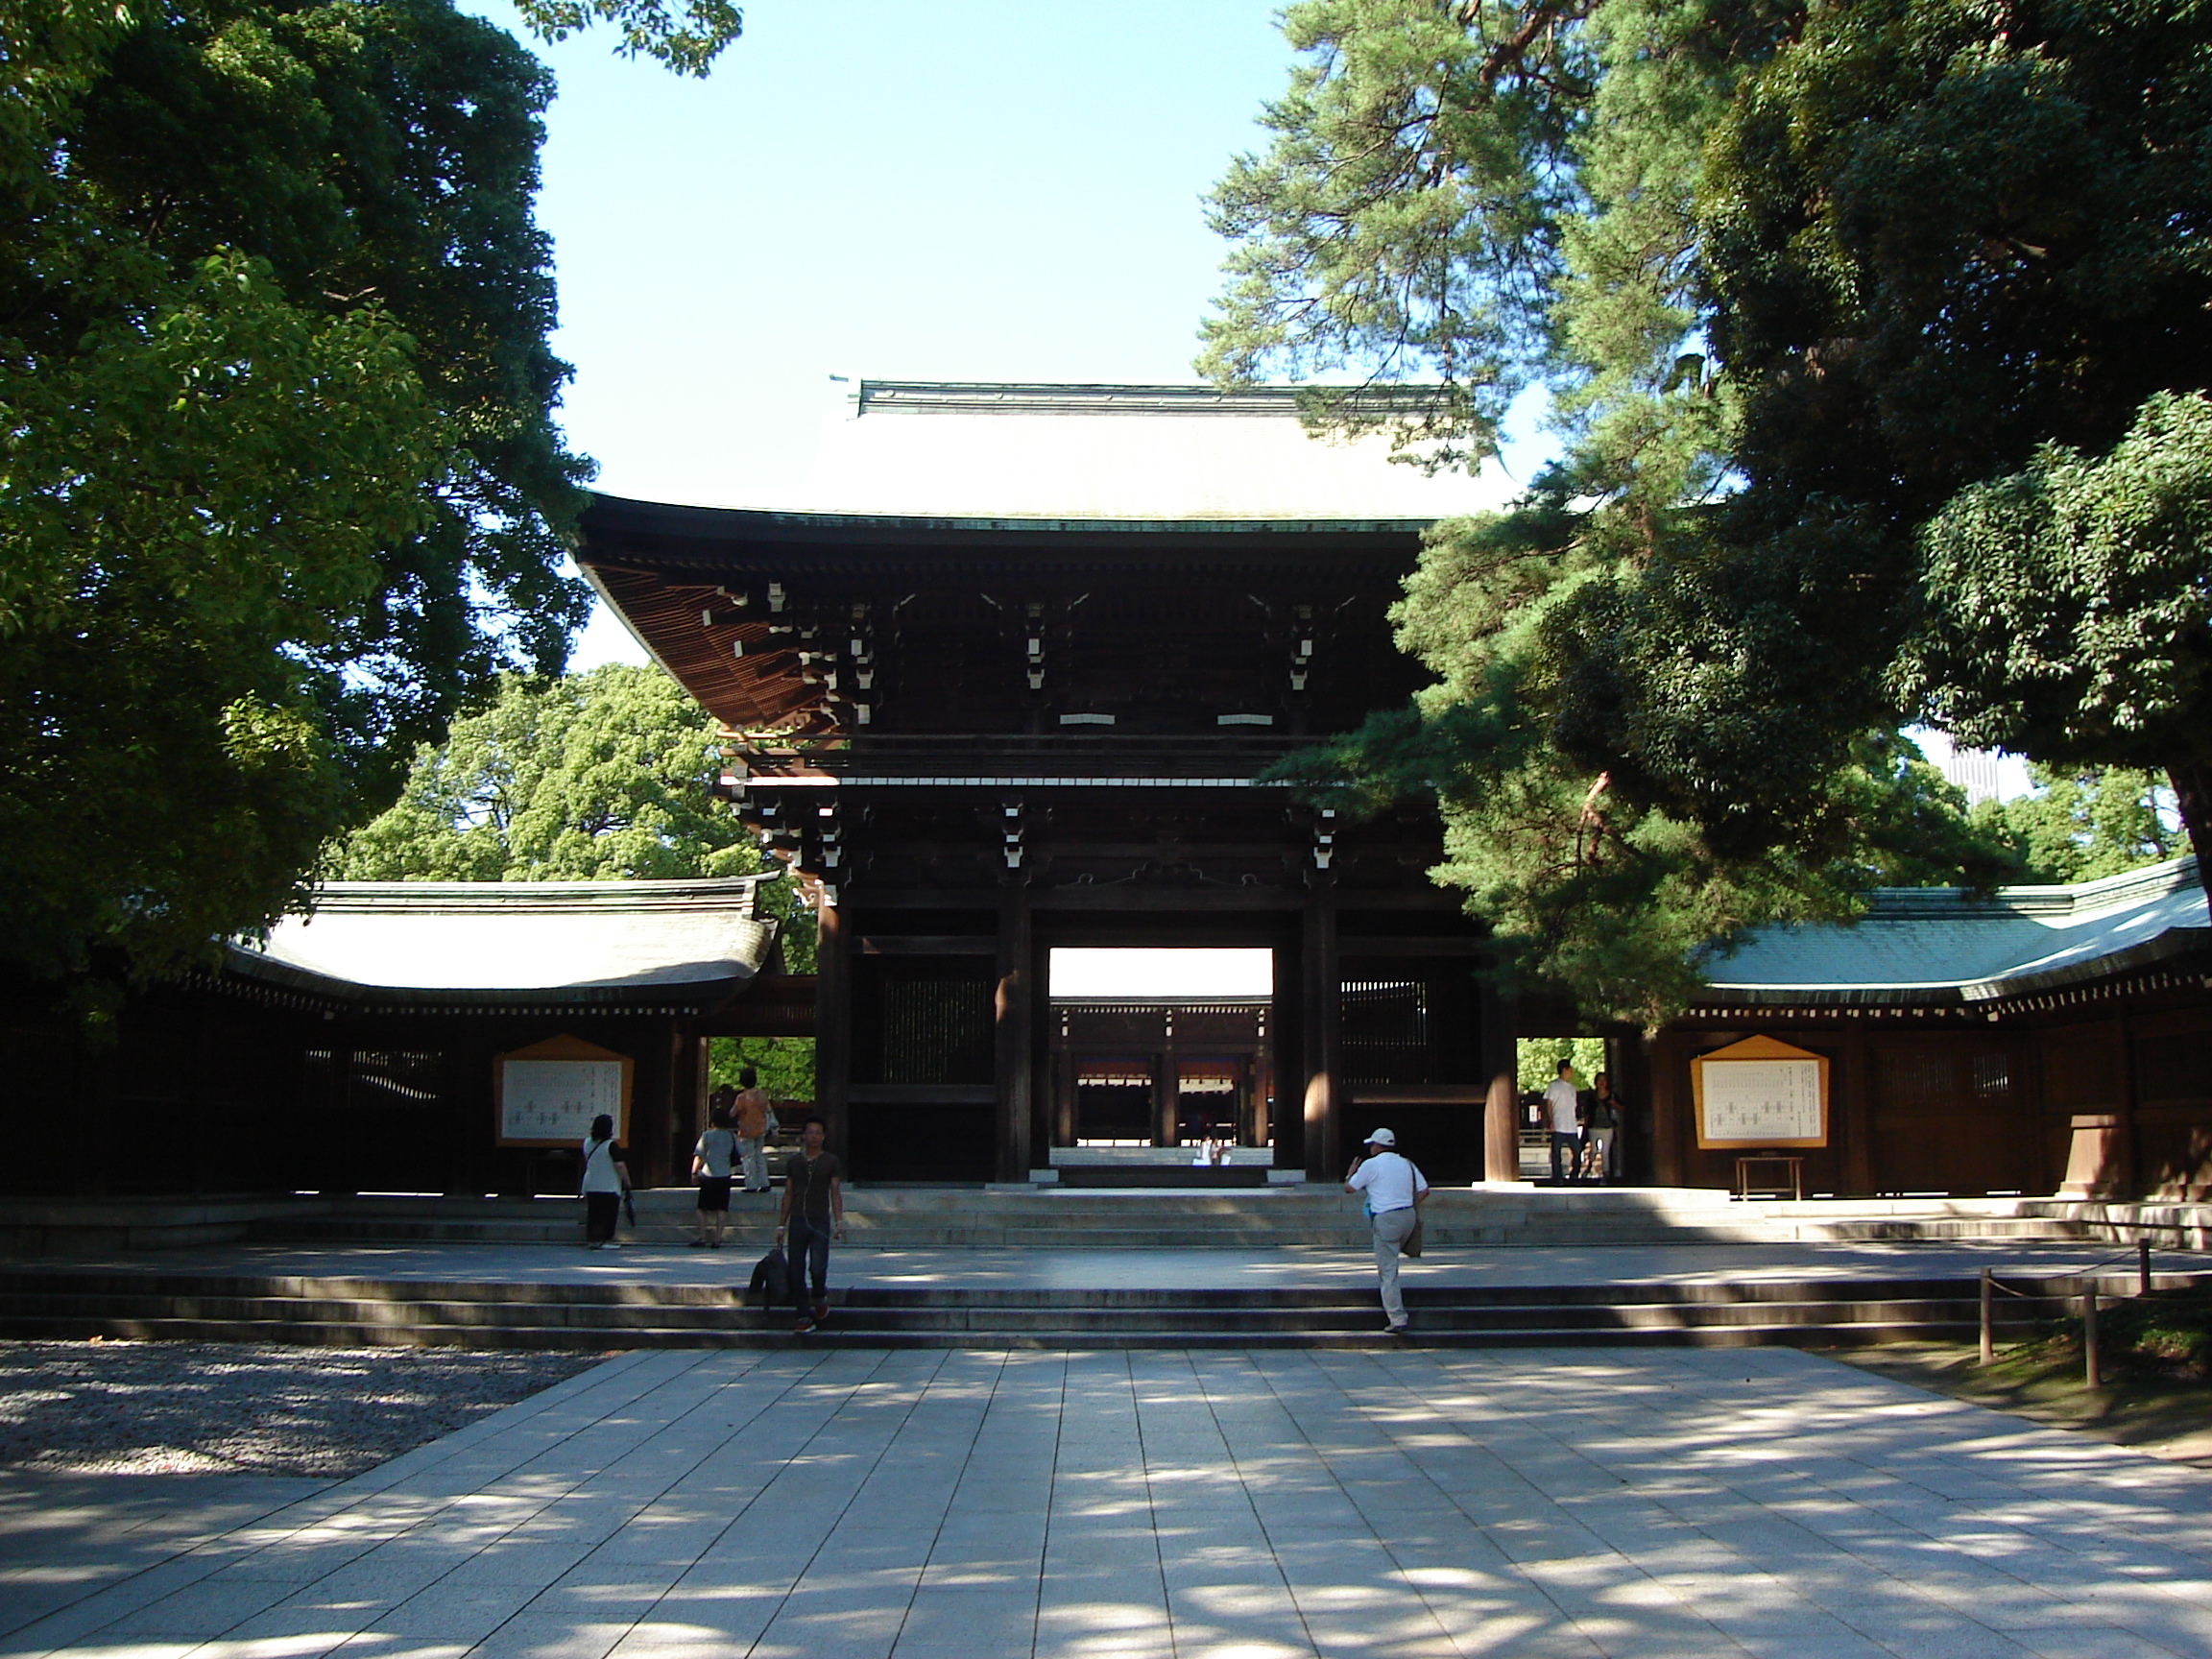 the main shrine area